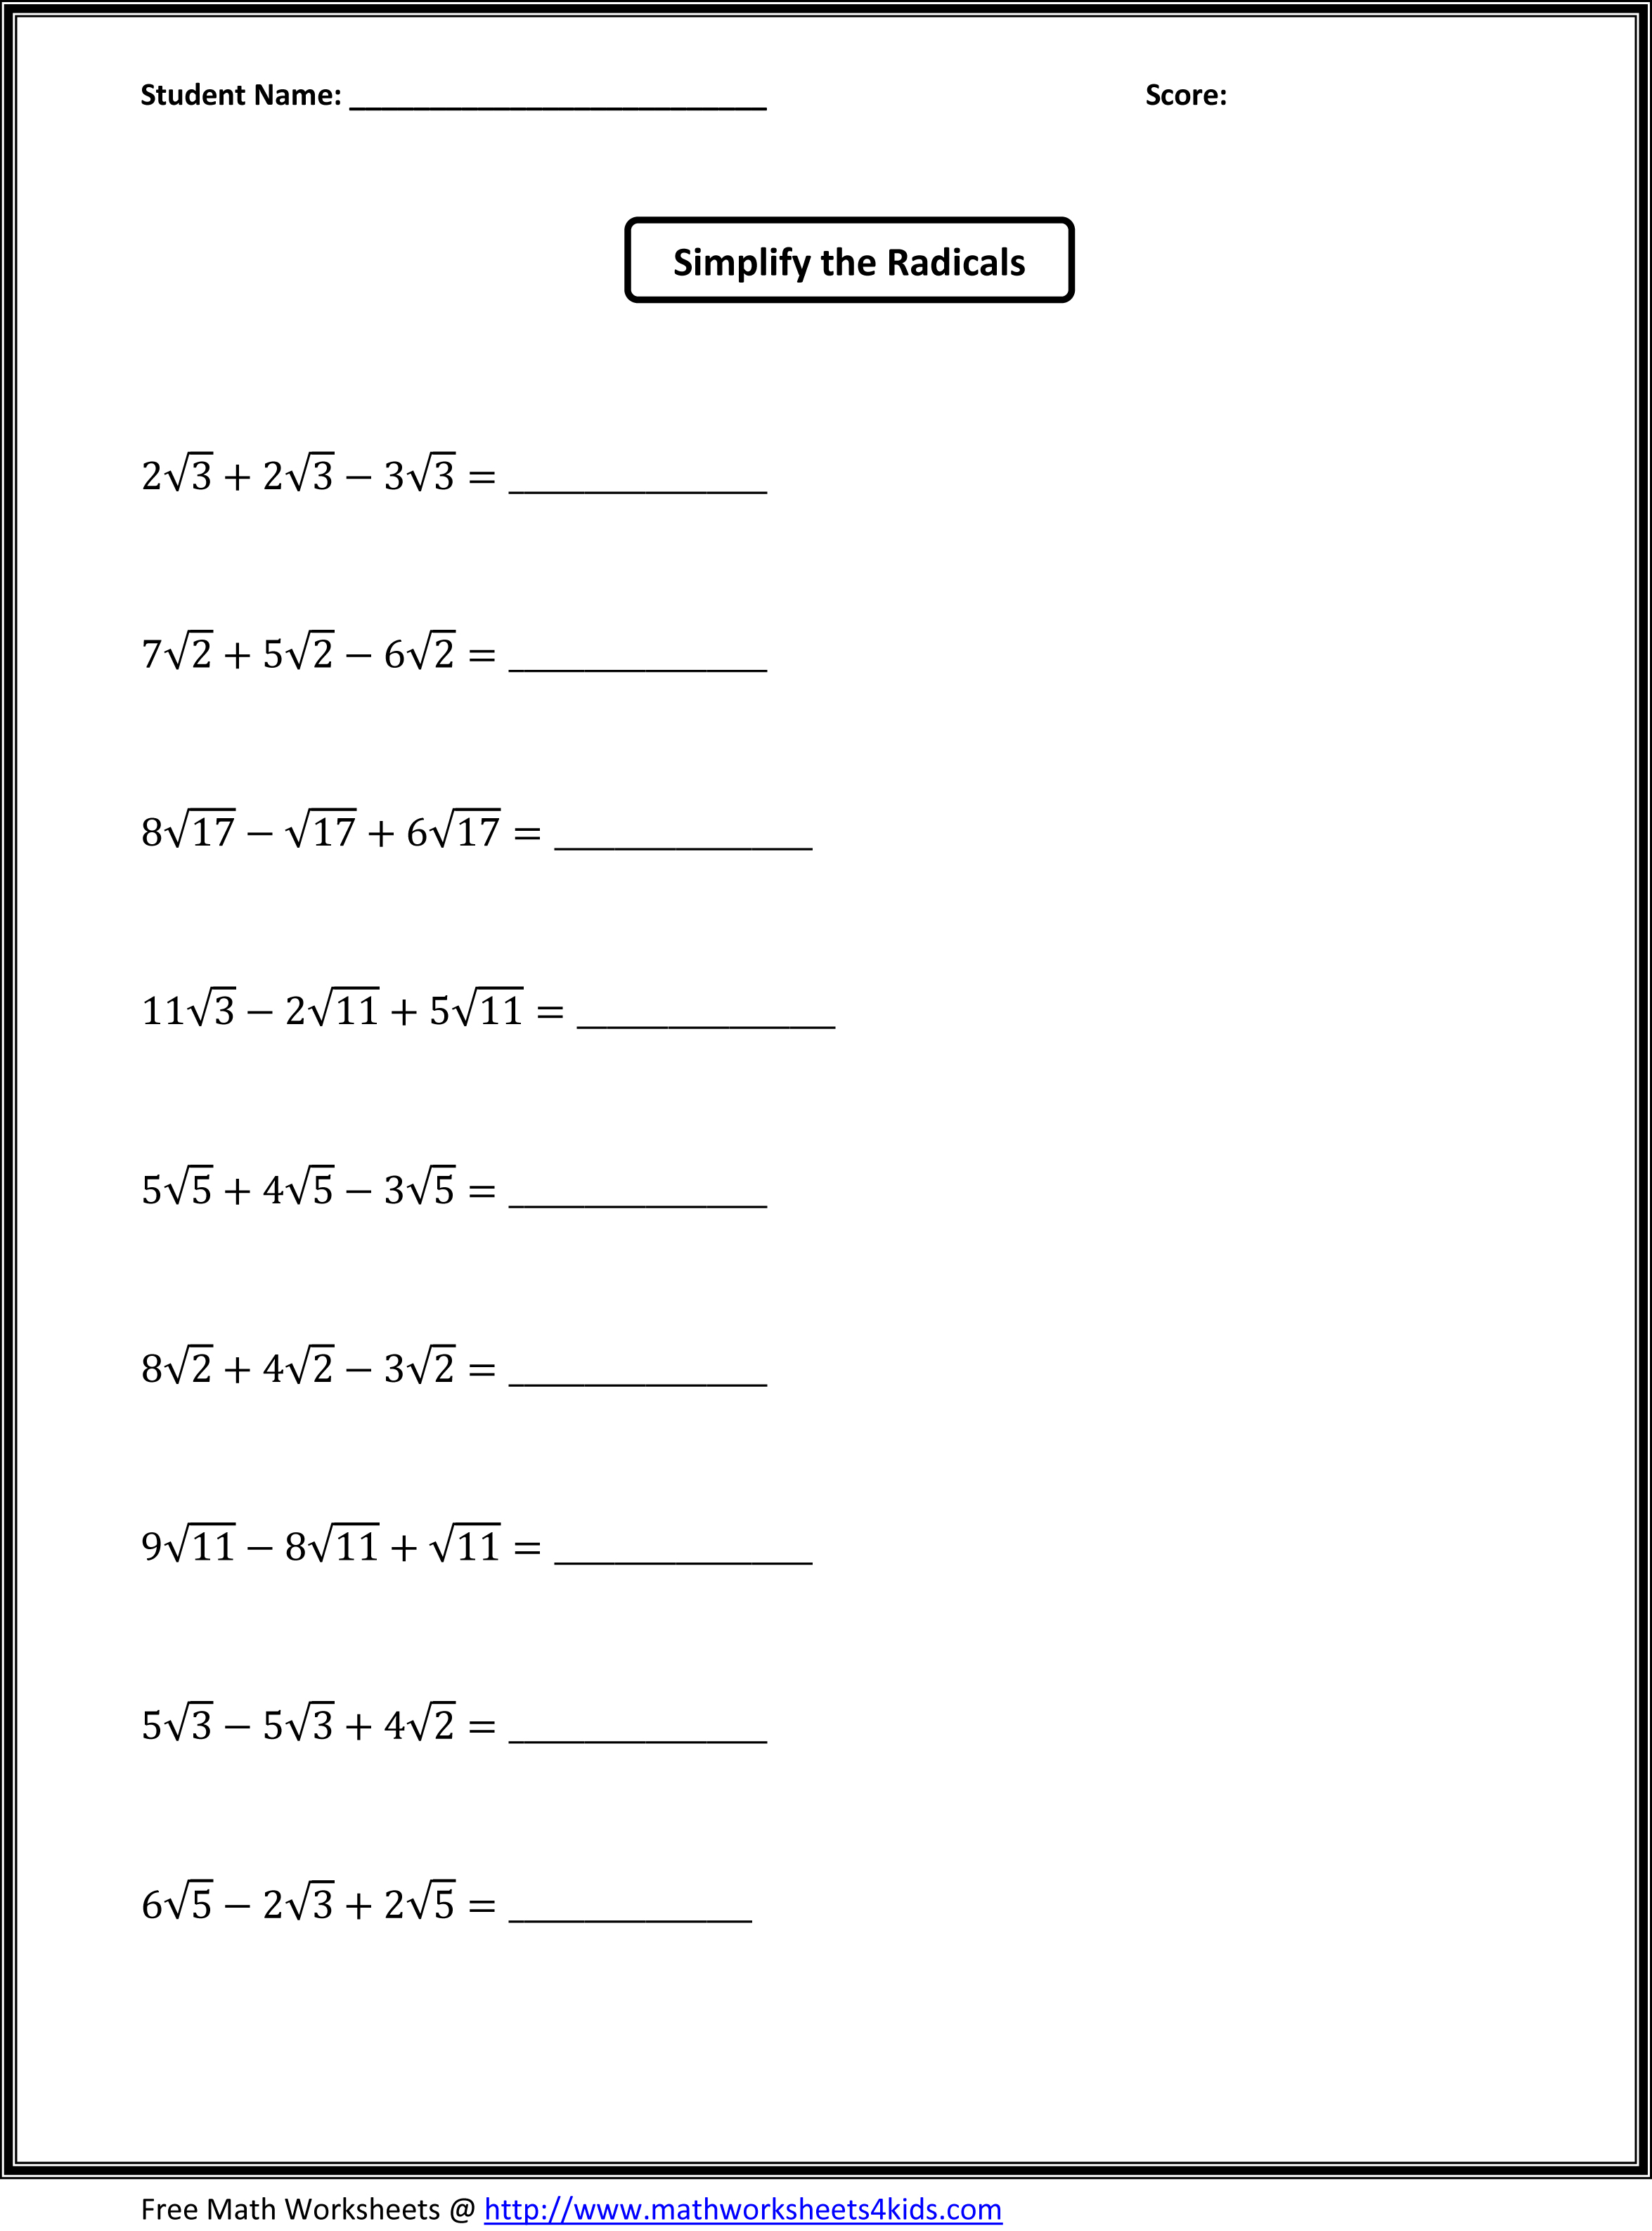 14 Best Images of Factoring Expressions Worksheet 7th Grade - Algebra